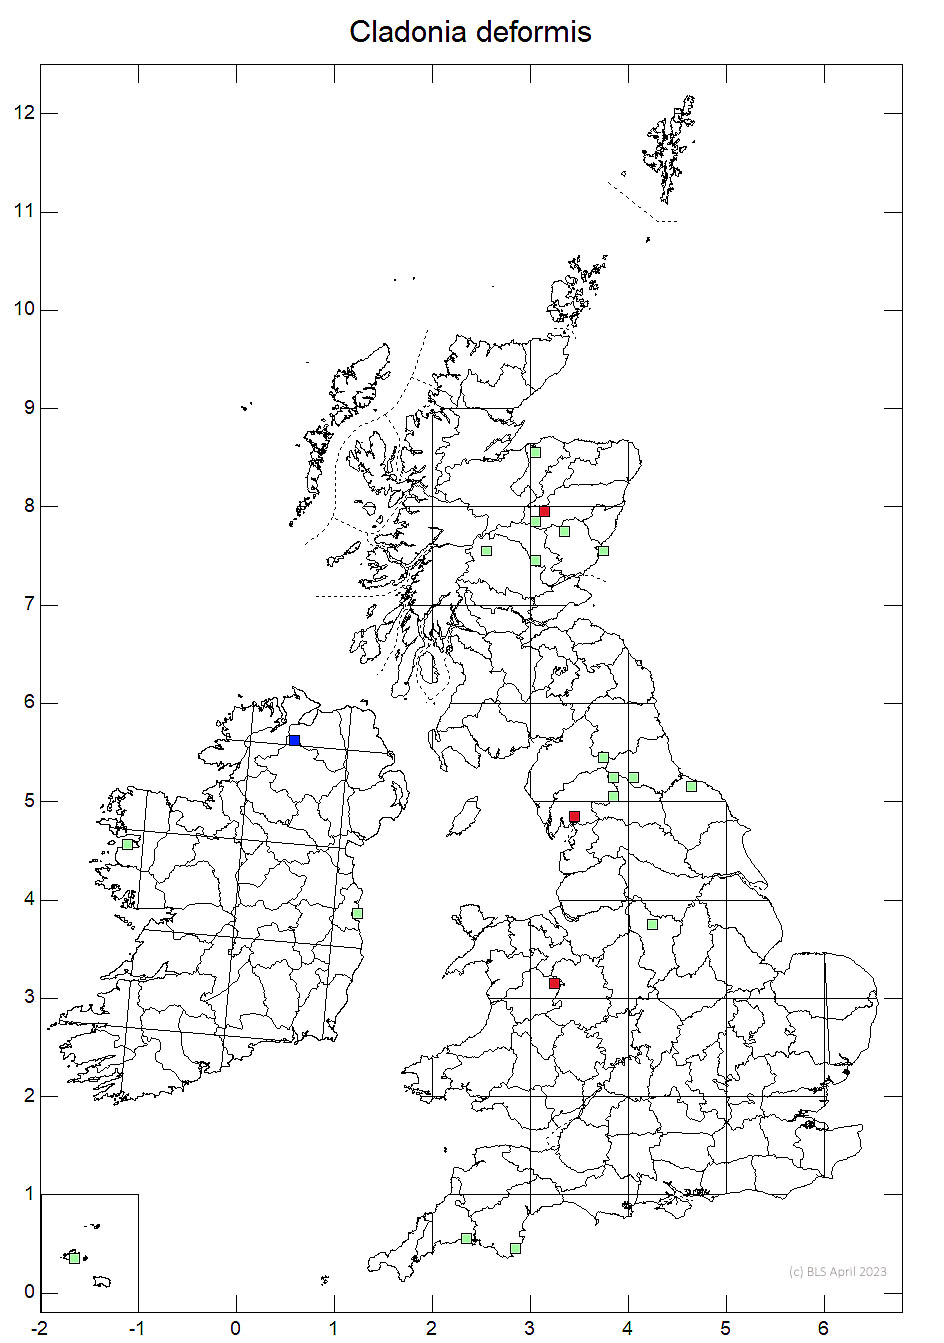 Cladonia deformis 10km sq distribution map